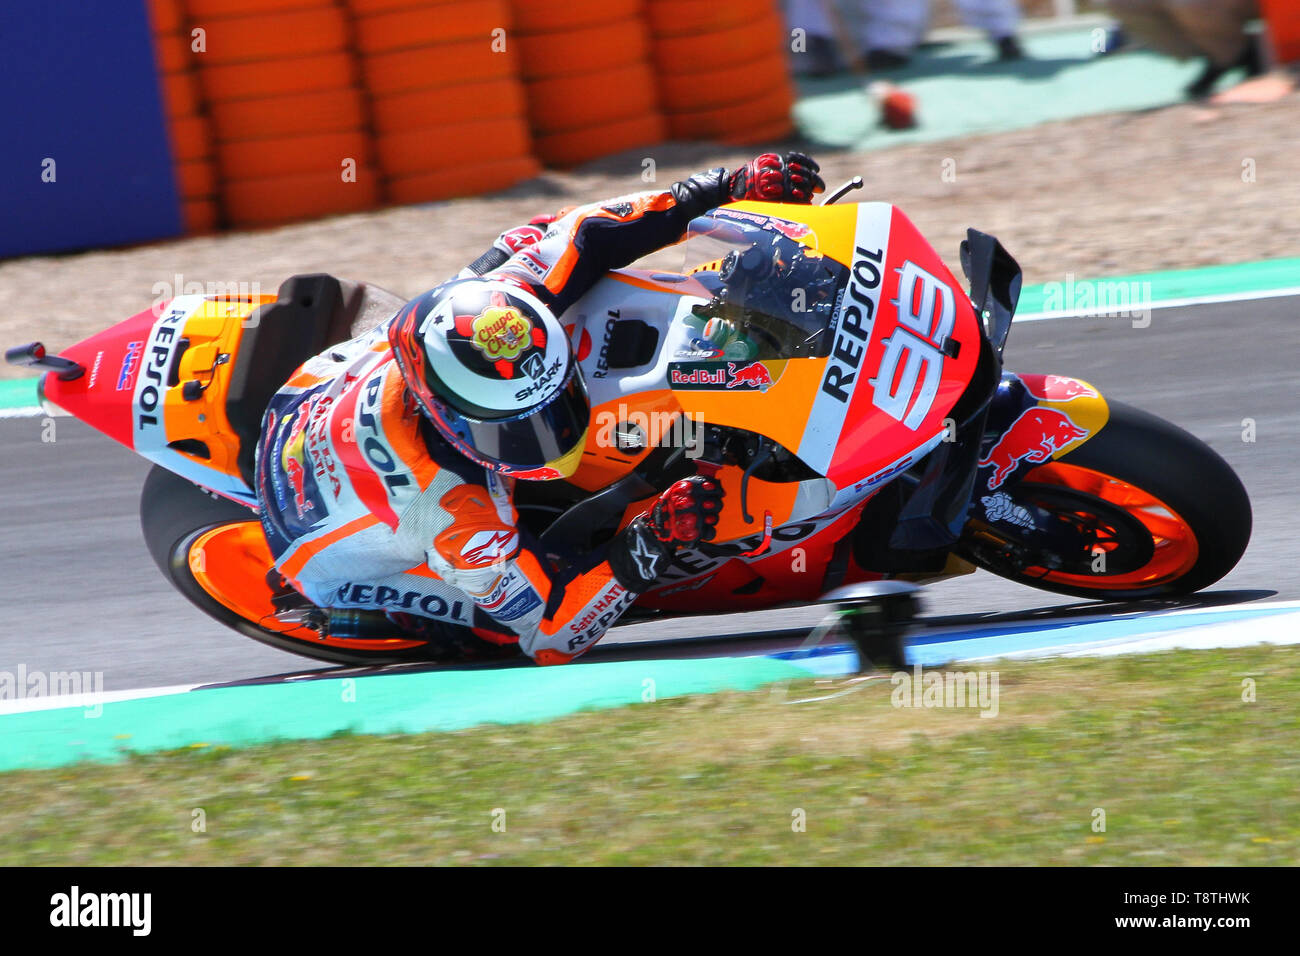 99 Jorge Lorenzo on track, free practice, MotoGP Spain round Stock Photo -  Alamy